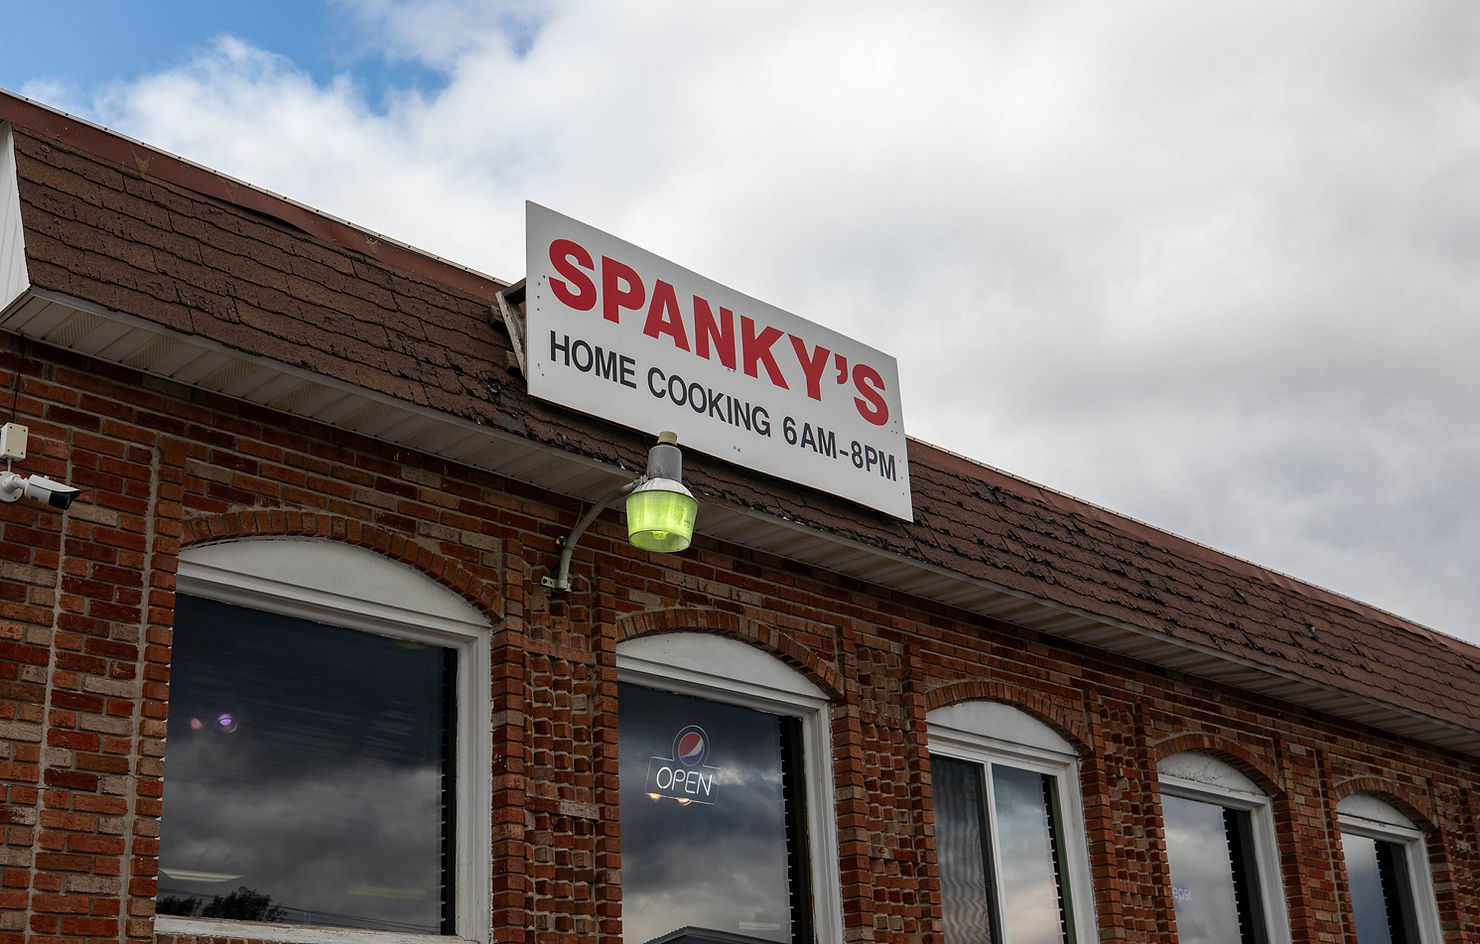 spanky's diner, spankys home cooking restaurant, spanky's hour of operation 6 am - 8pm, Spanky's diner in massena, new york